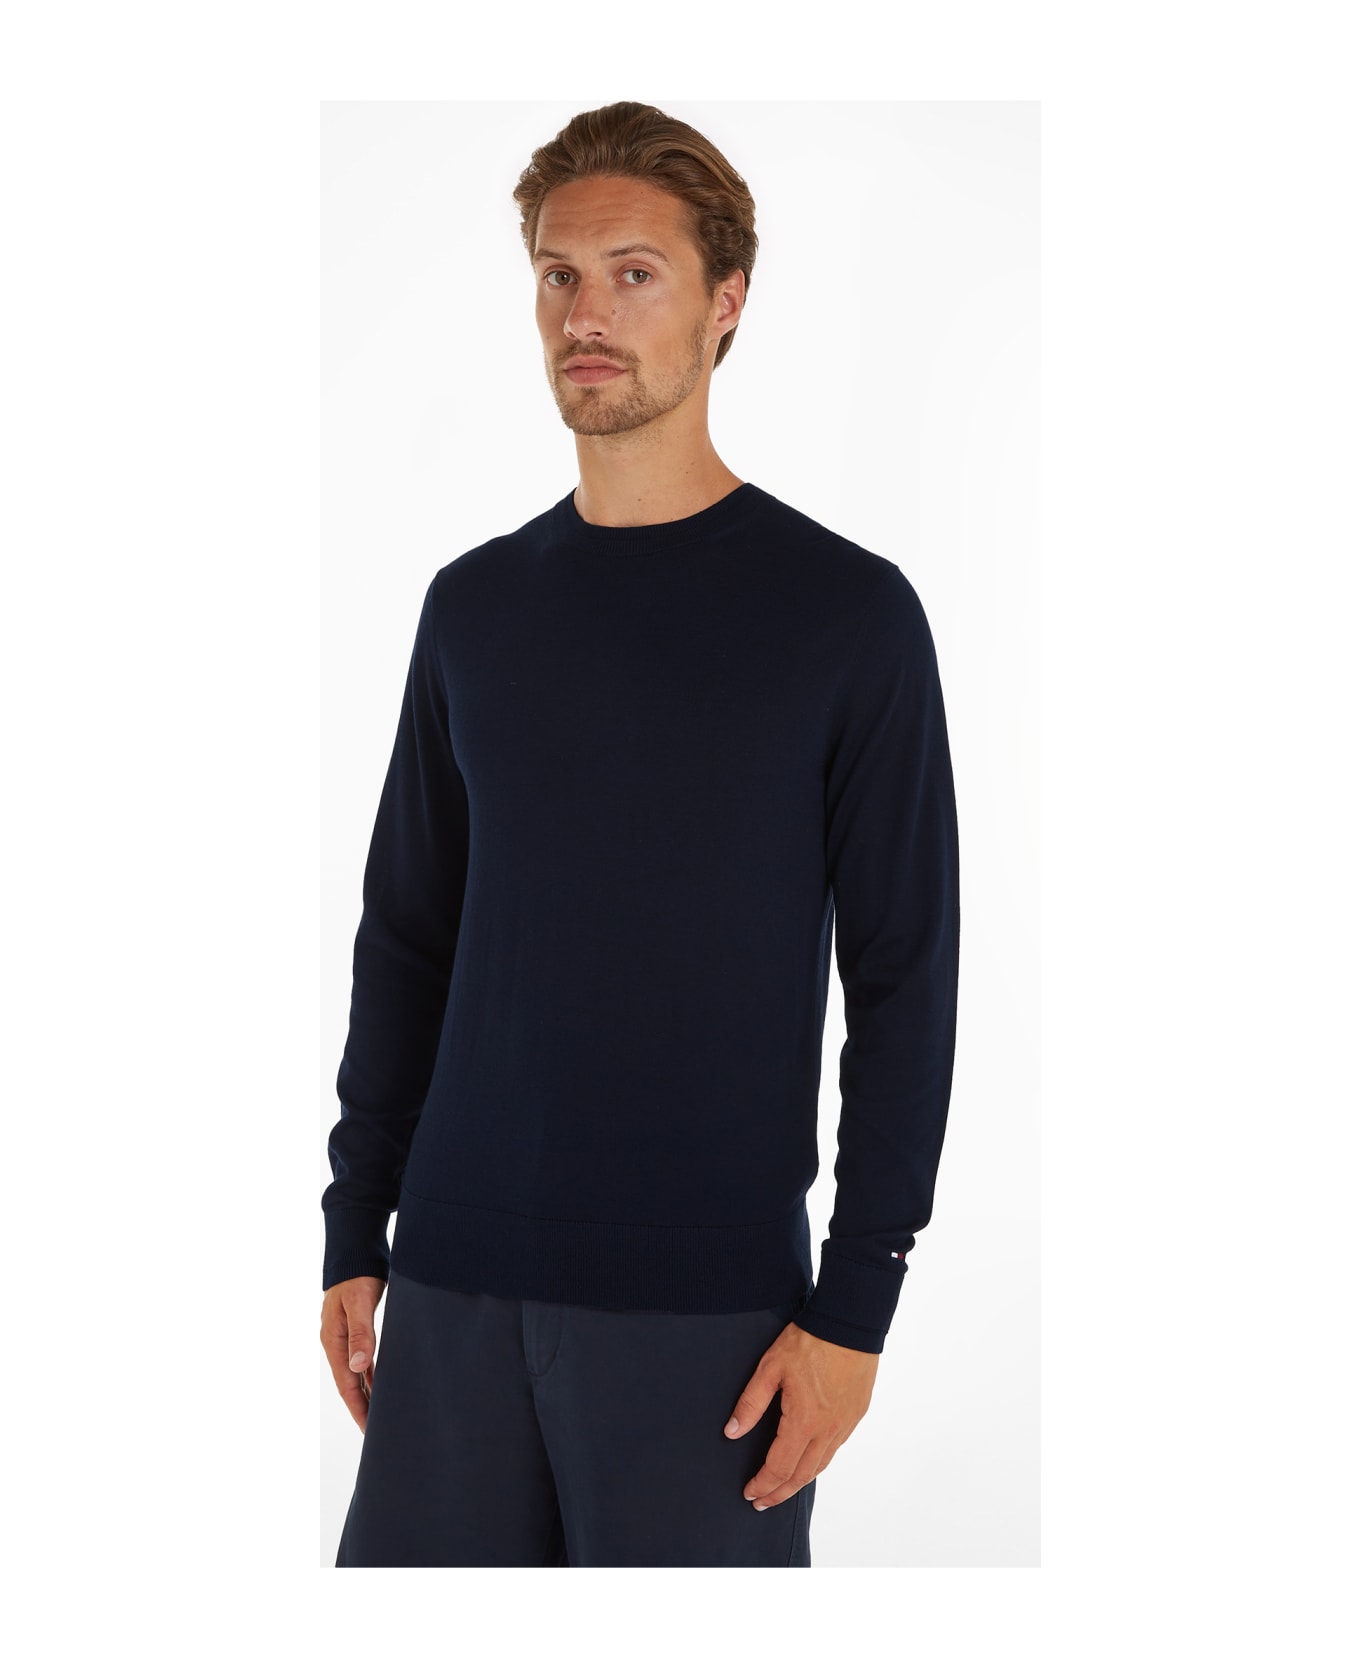 Tommy Hilfiger Navy Blue Crew Neck Sweater - DESERT SKY ニットウェア